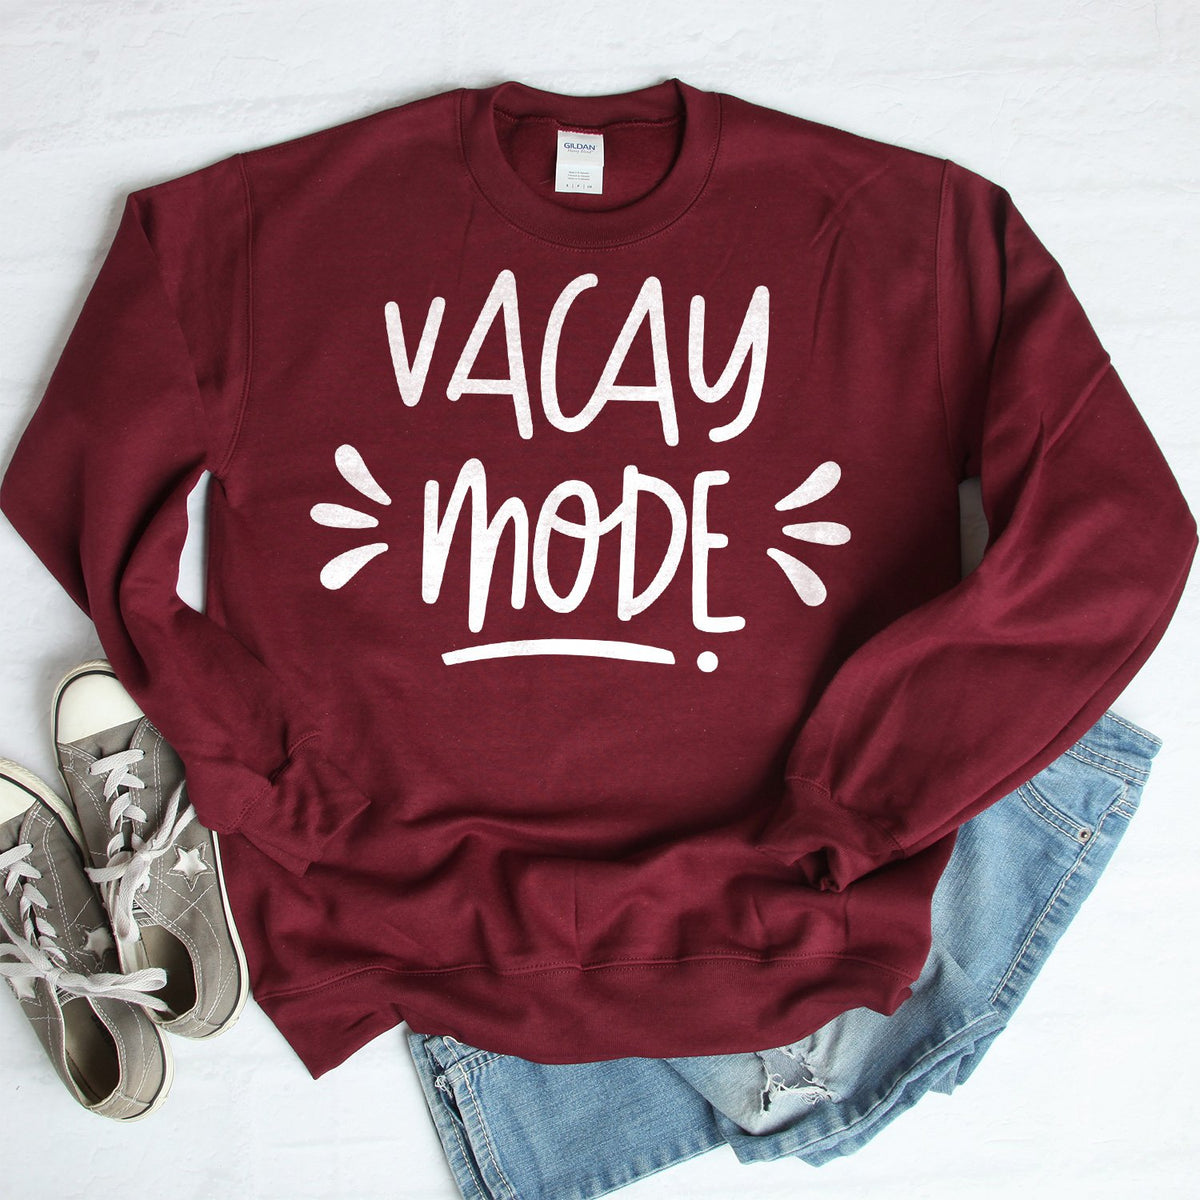 Vacay Mode - Long Sleeve Heavy Crewneck Sweatshirt